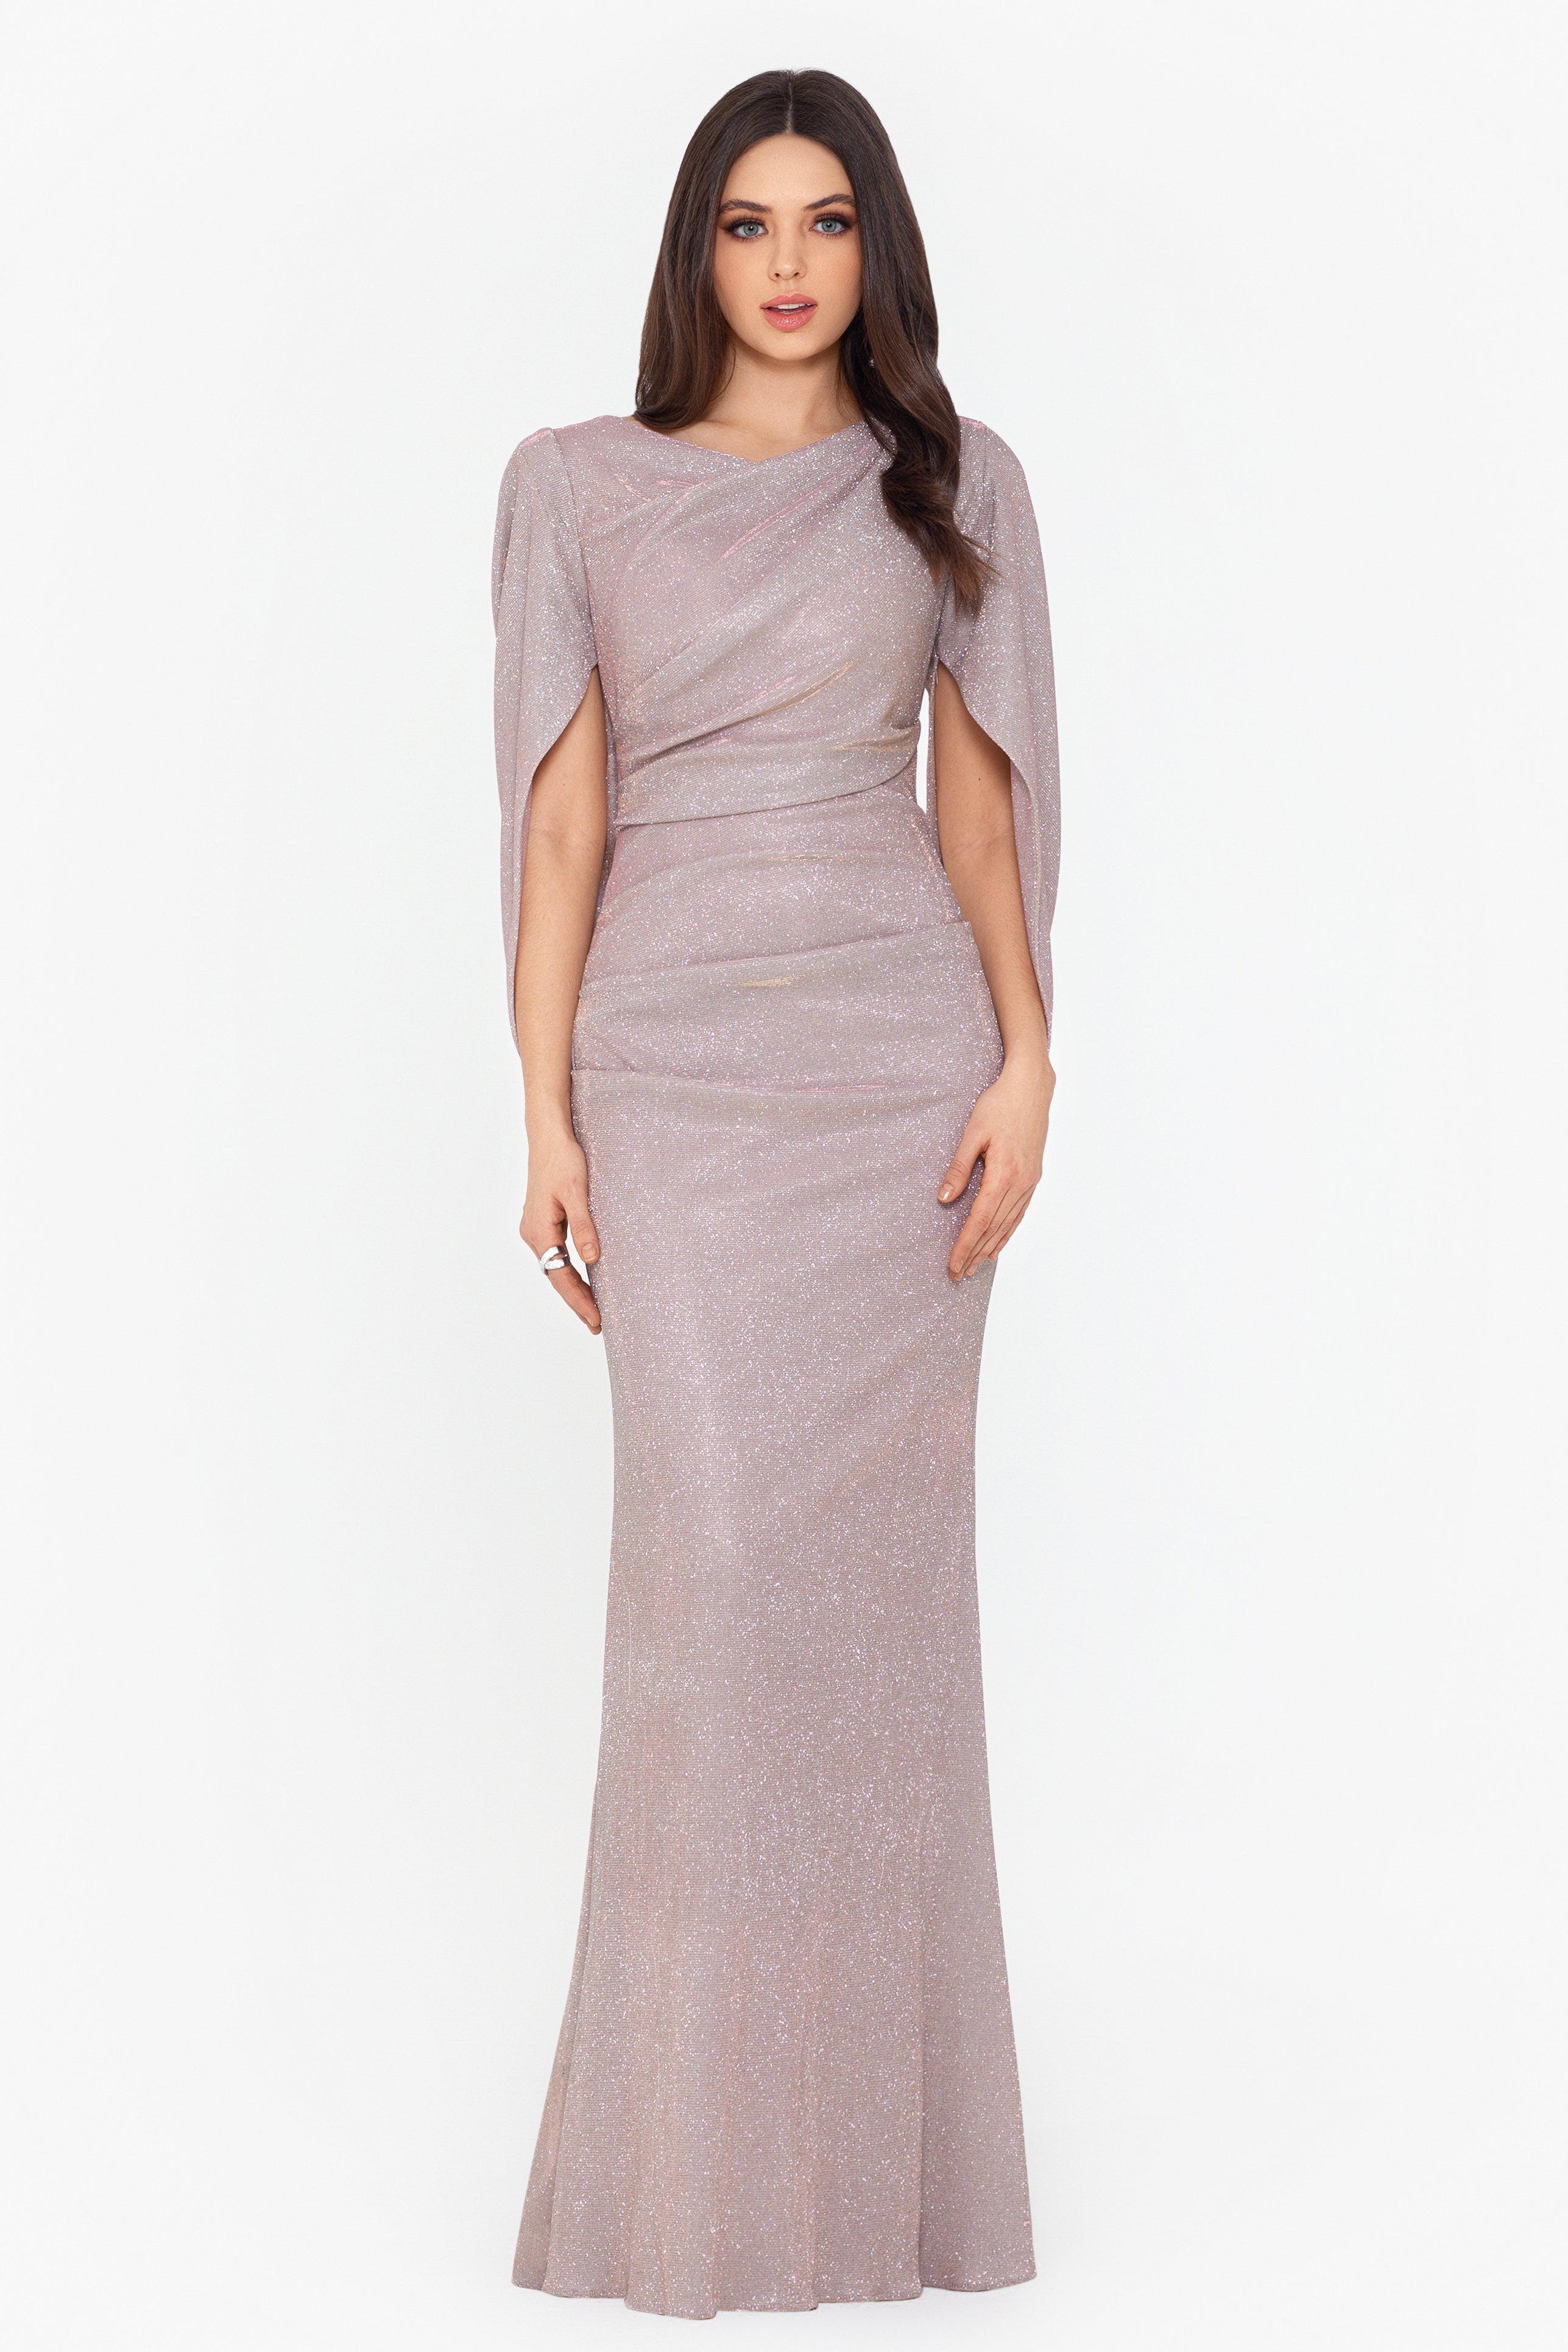 Women Deep V Glitter Galaxy Long Evening Flared Dress Pretty Cocktail Prom  Gown | eBay